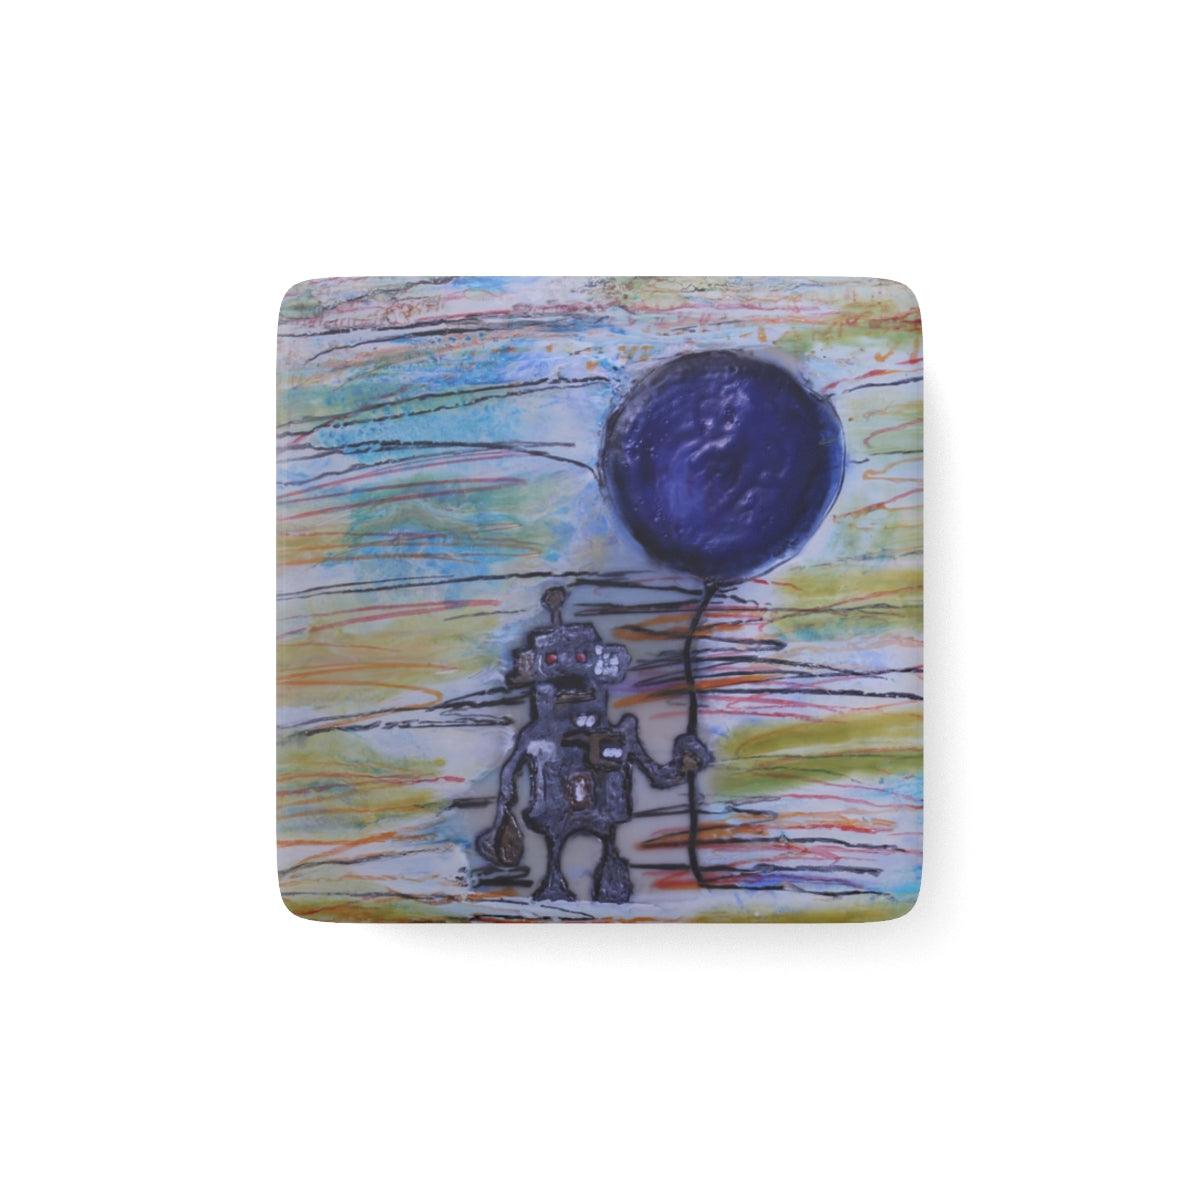 "Lonely Robot" Porcelain Magnet, Square-Home Decor - Mike Giannella - Encaustic Painting - Mixed Media Artist - Art Prints